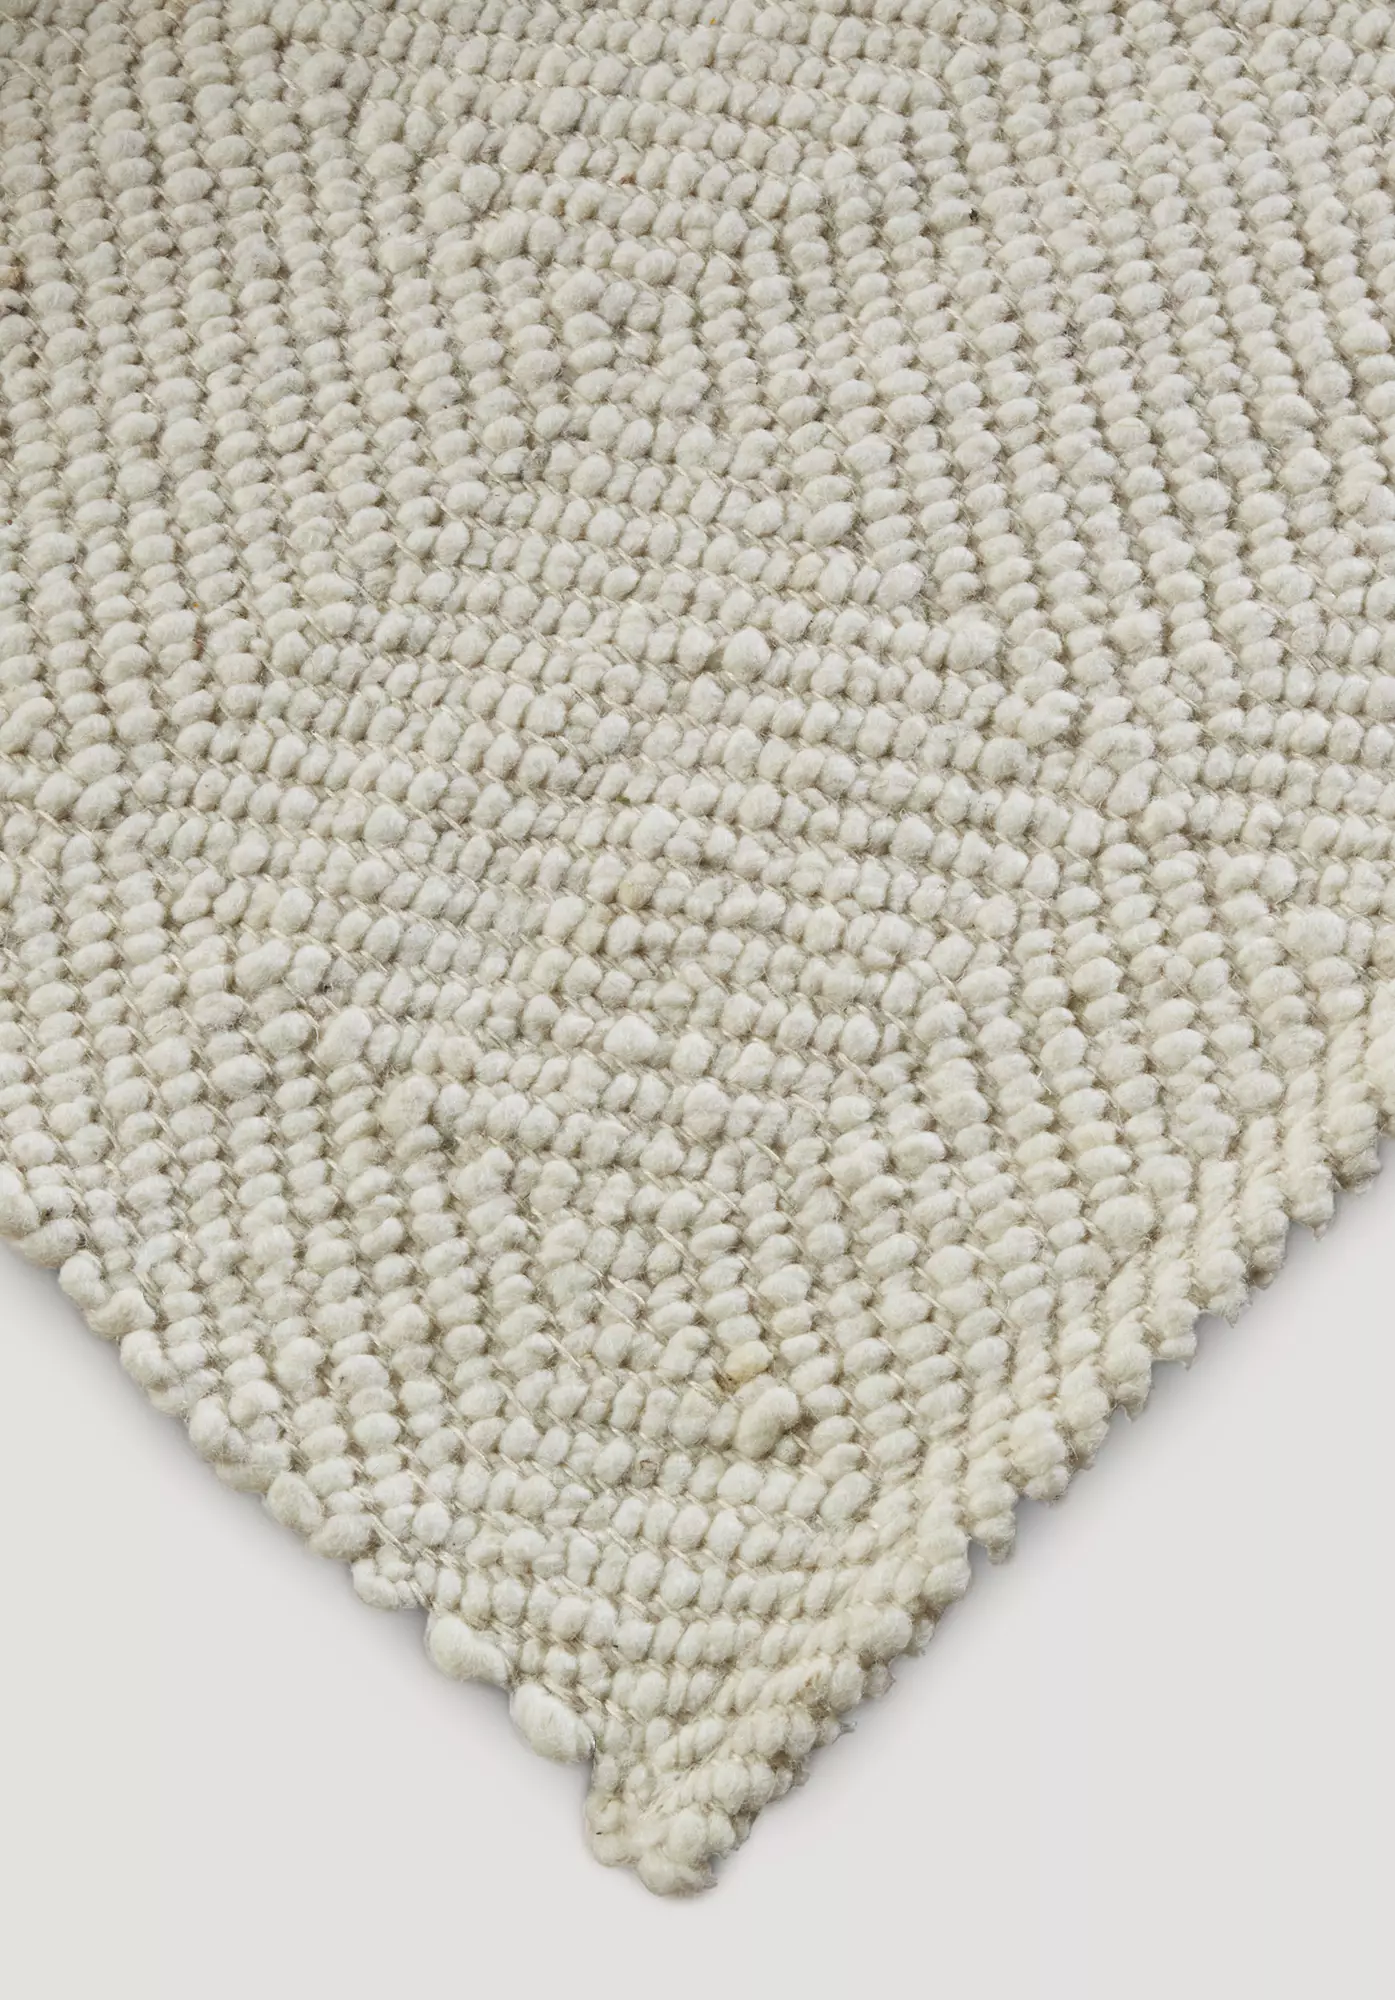 Virgin wool carpet RUGA from Deichschaf - 1